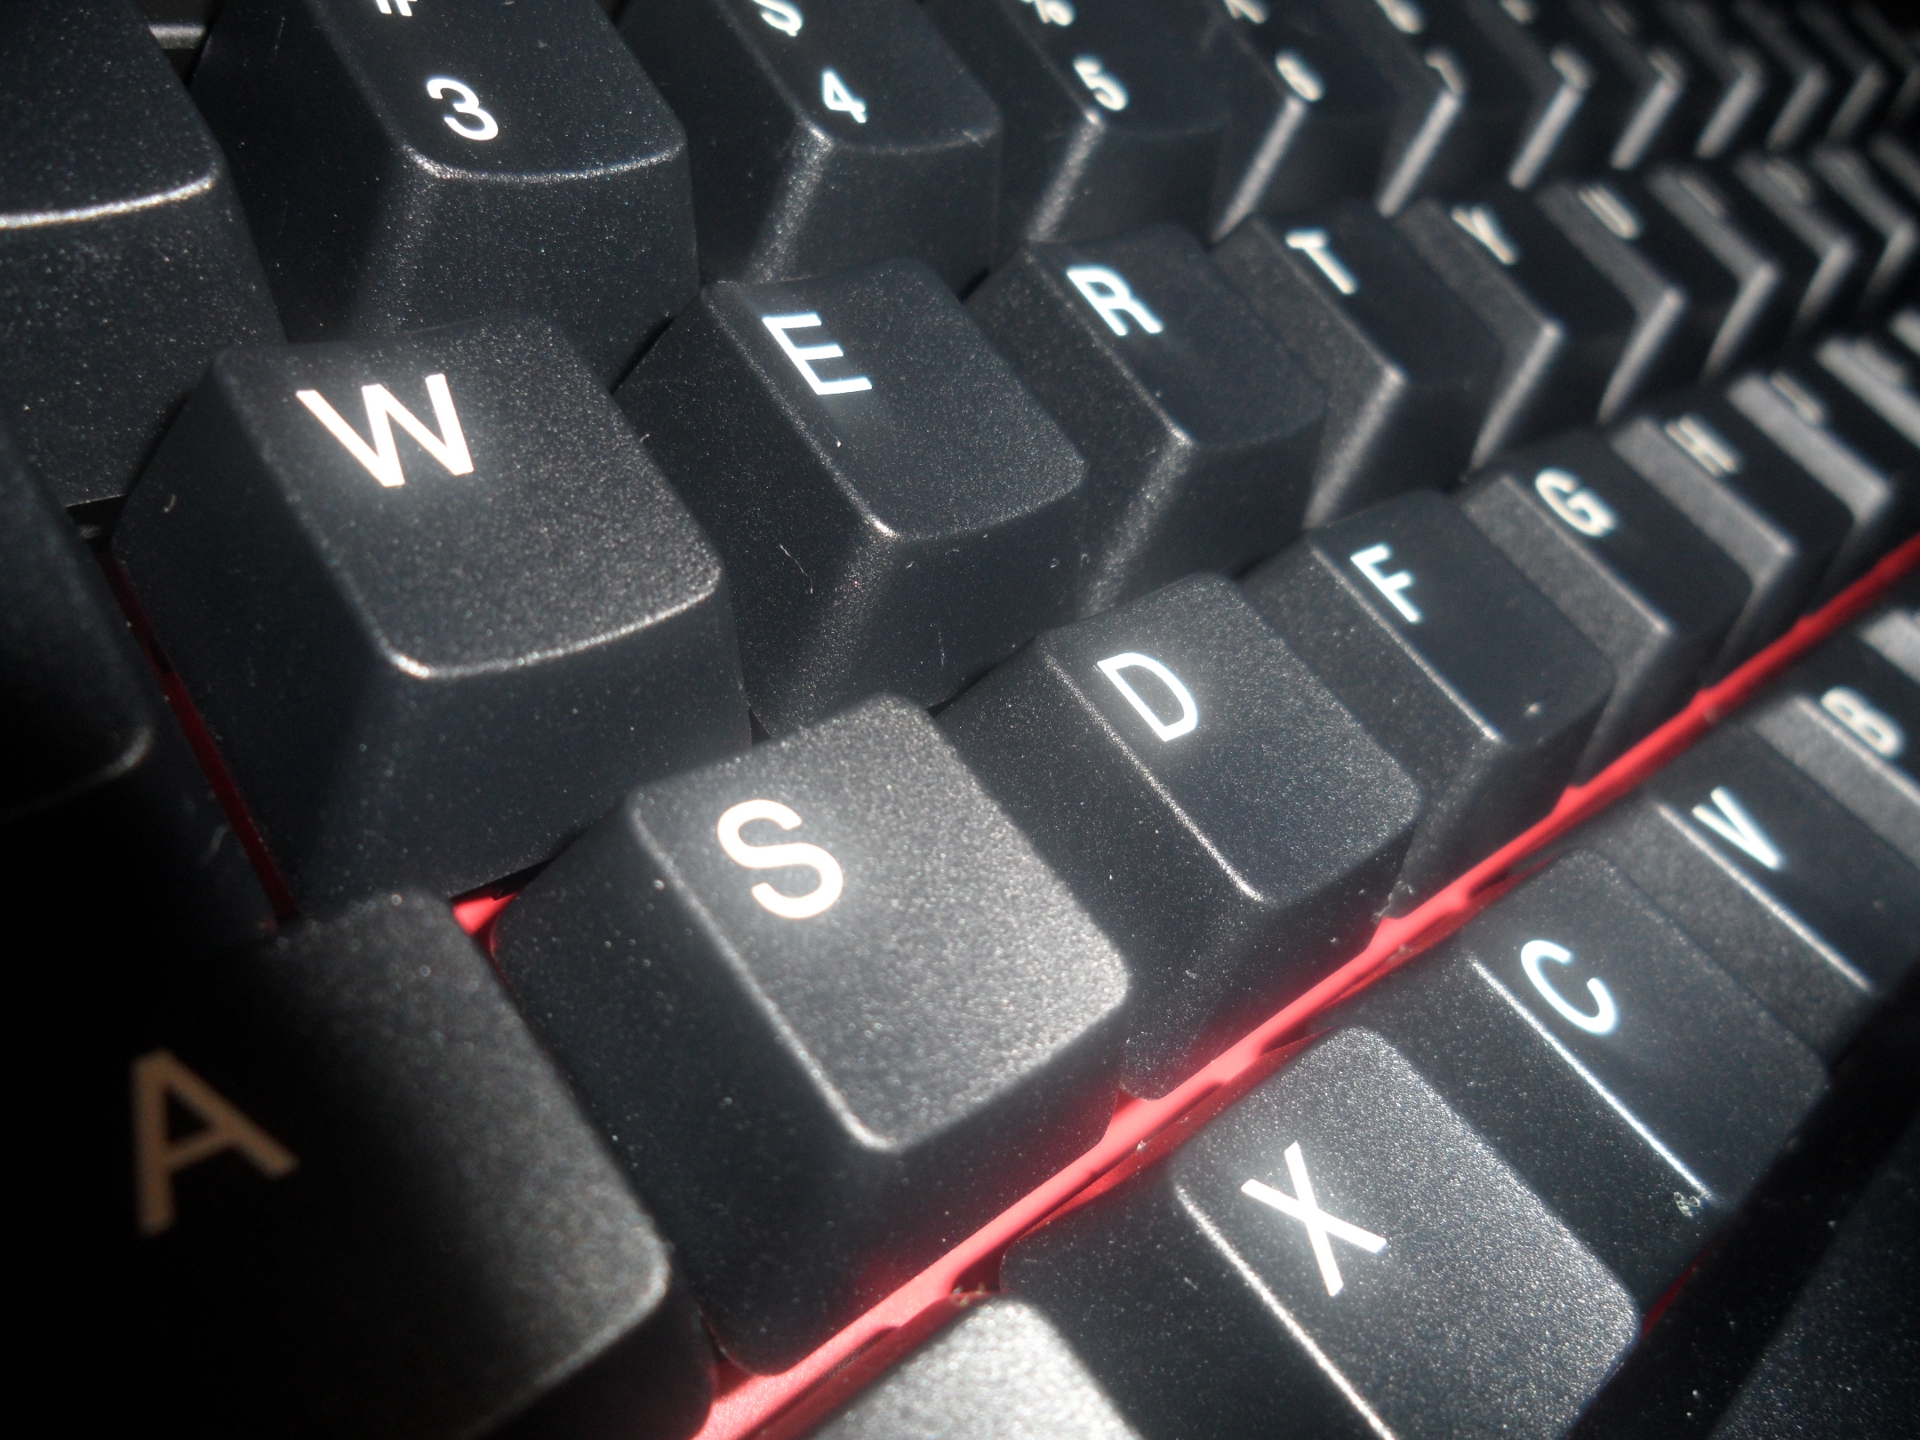 tastatur hintergrundbild,computer tastatur,eingabegerät,technologie,computerkomponente,laptop ersatztastatur